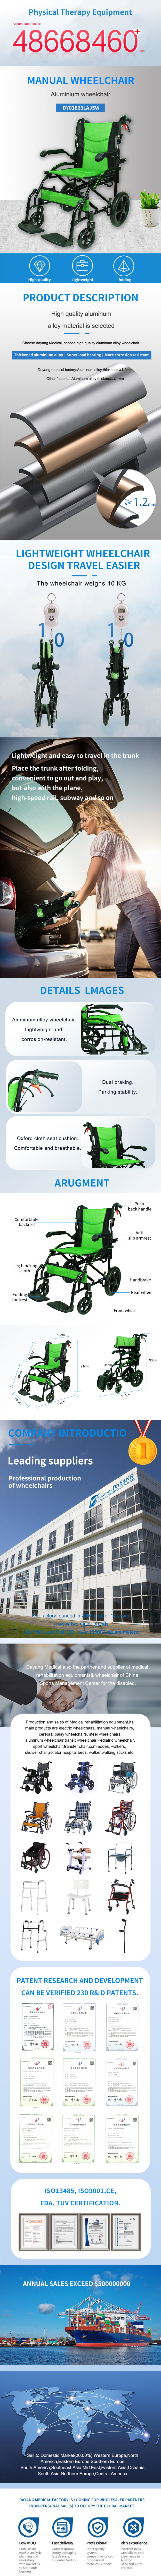 aluminum alloy frame manual wheelchair